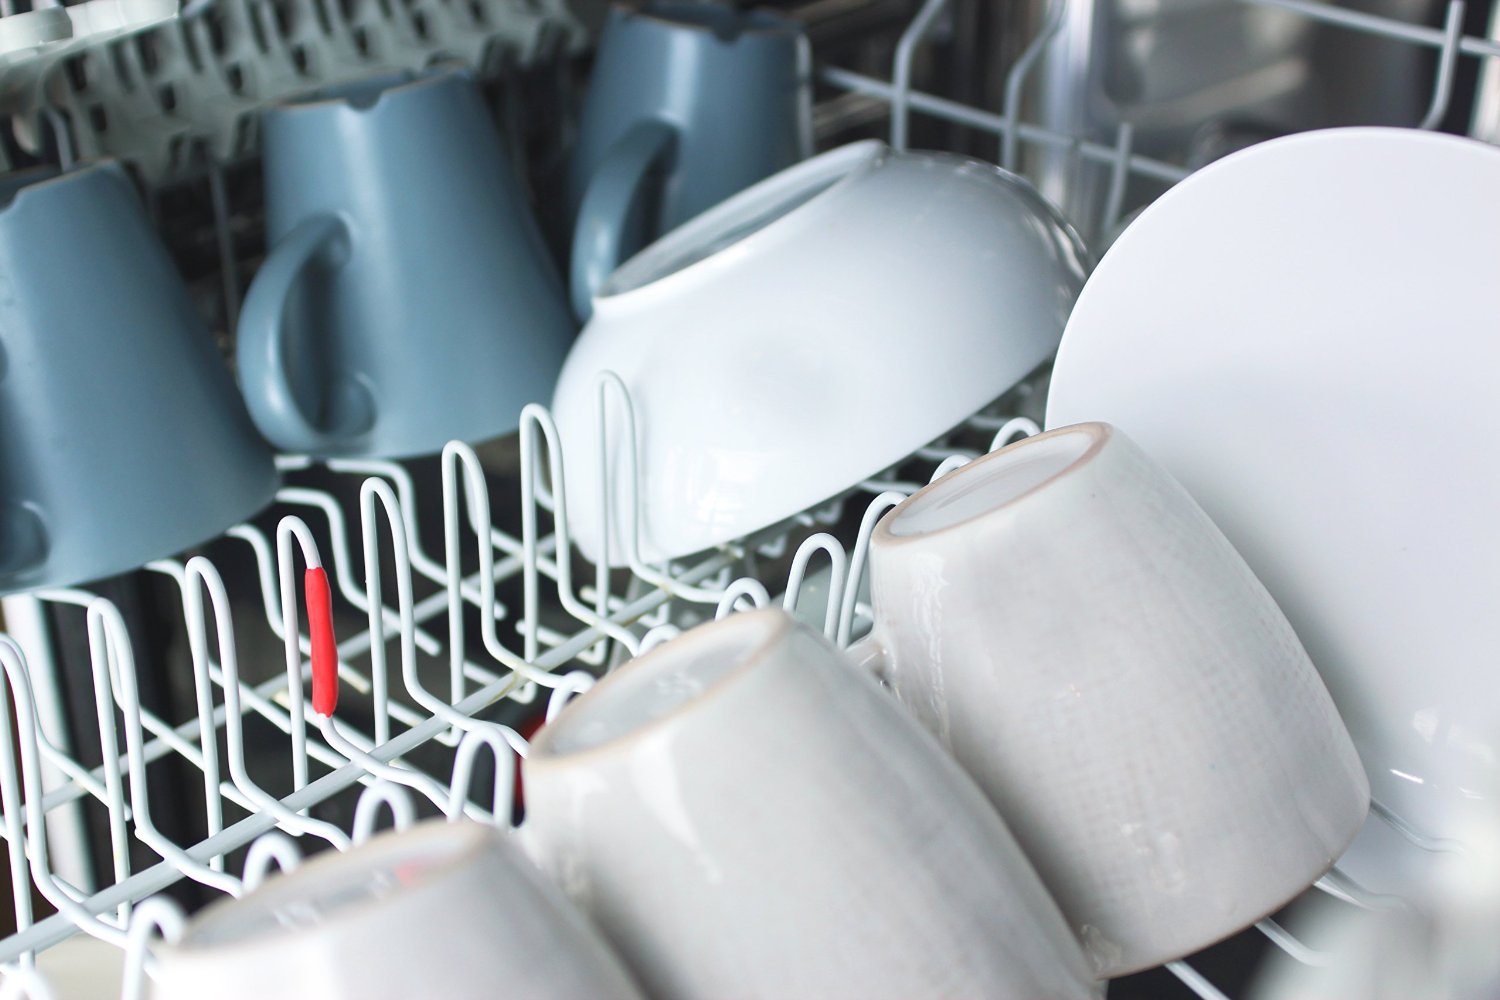 Sugru Moldable Glue on a dishwasher rack